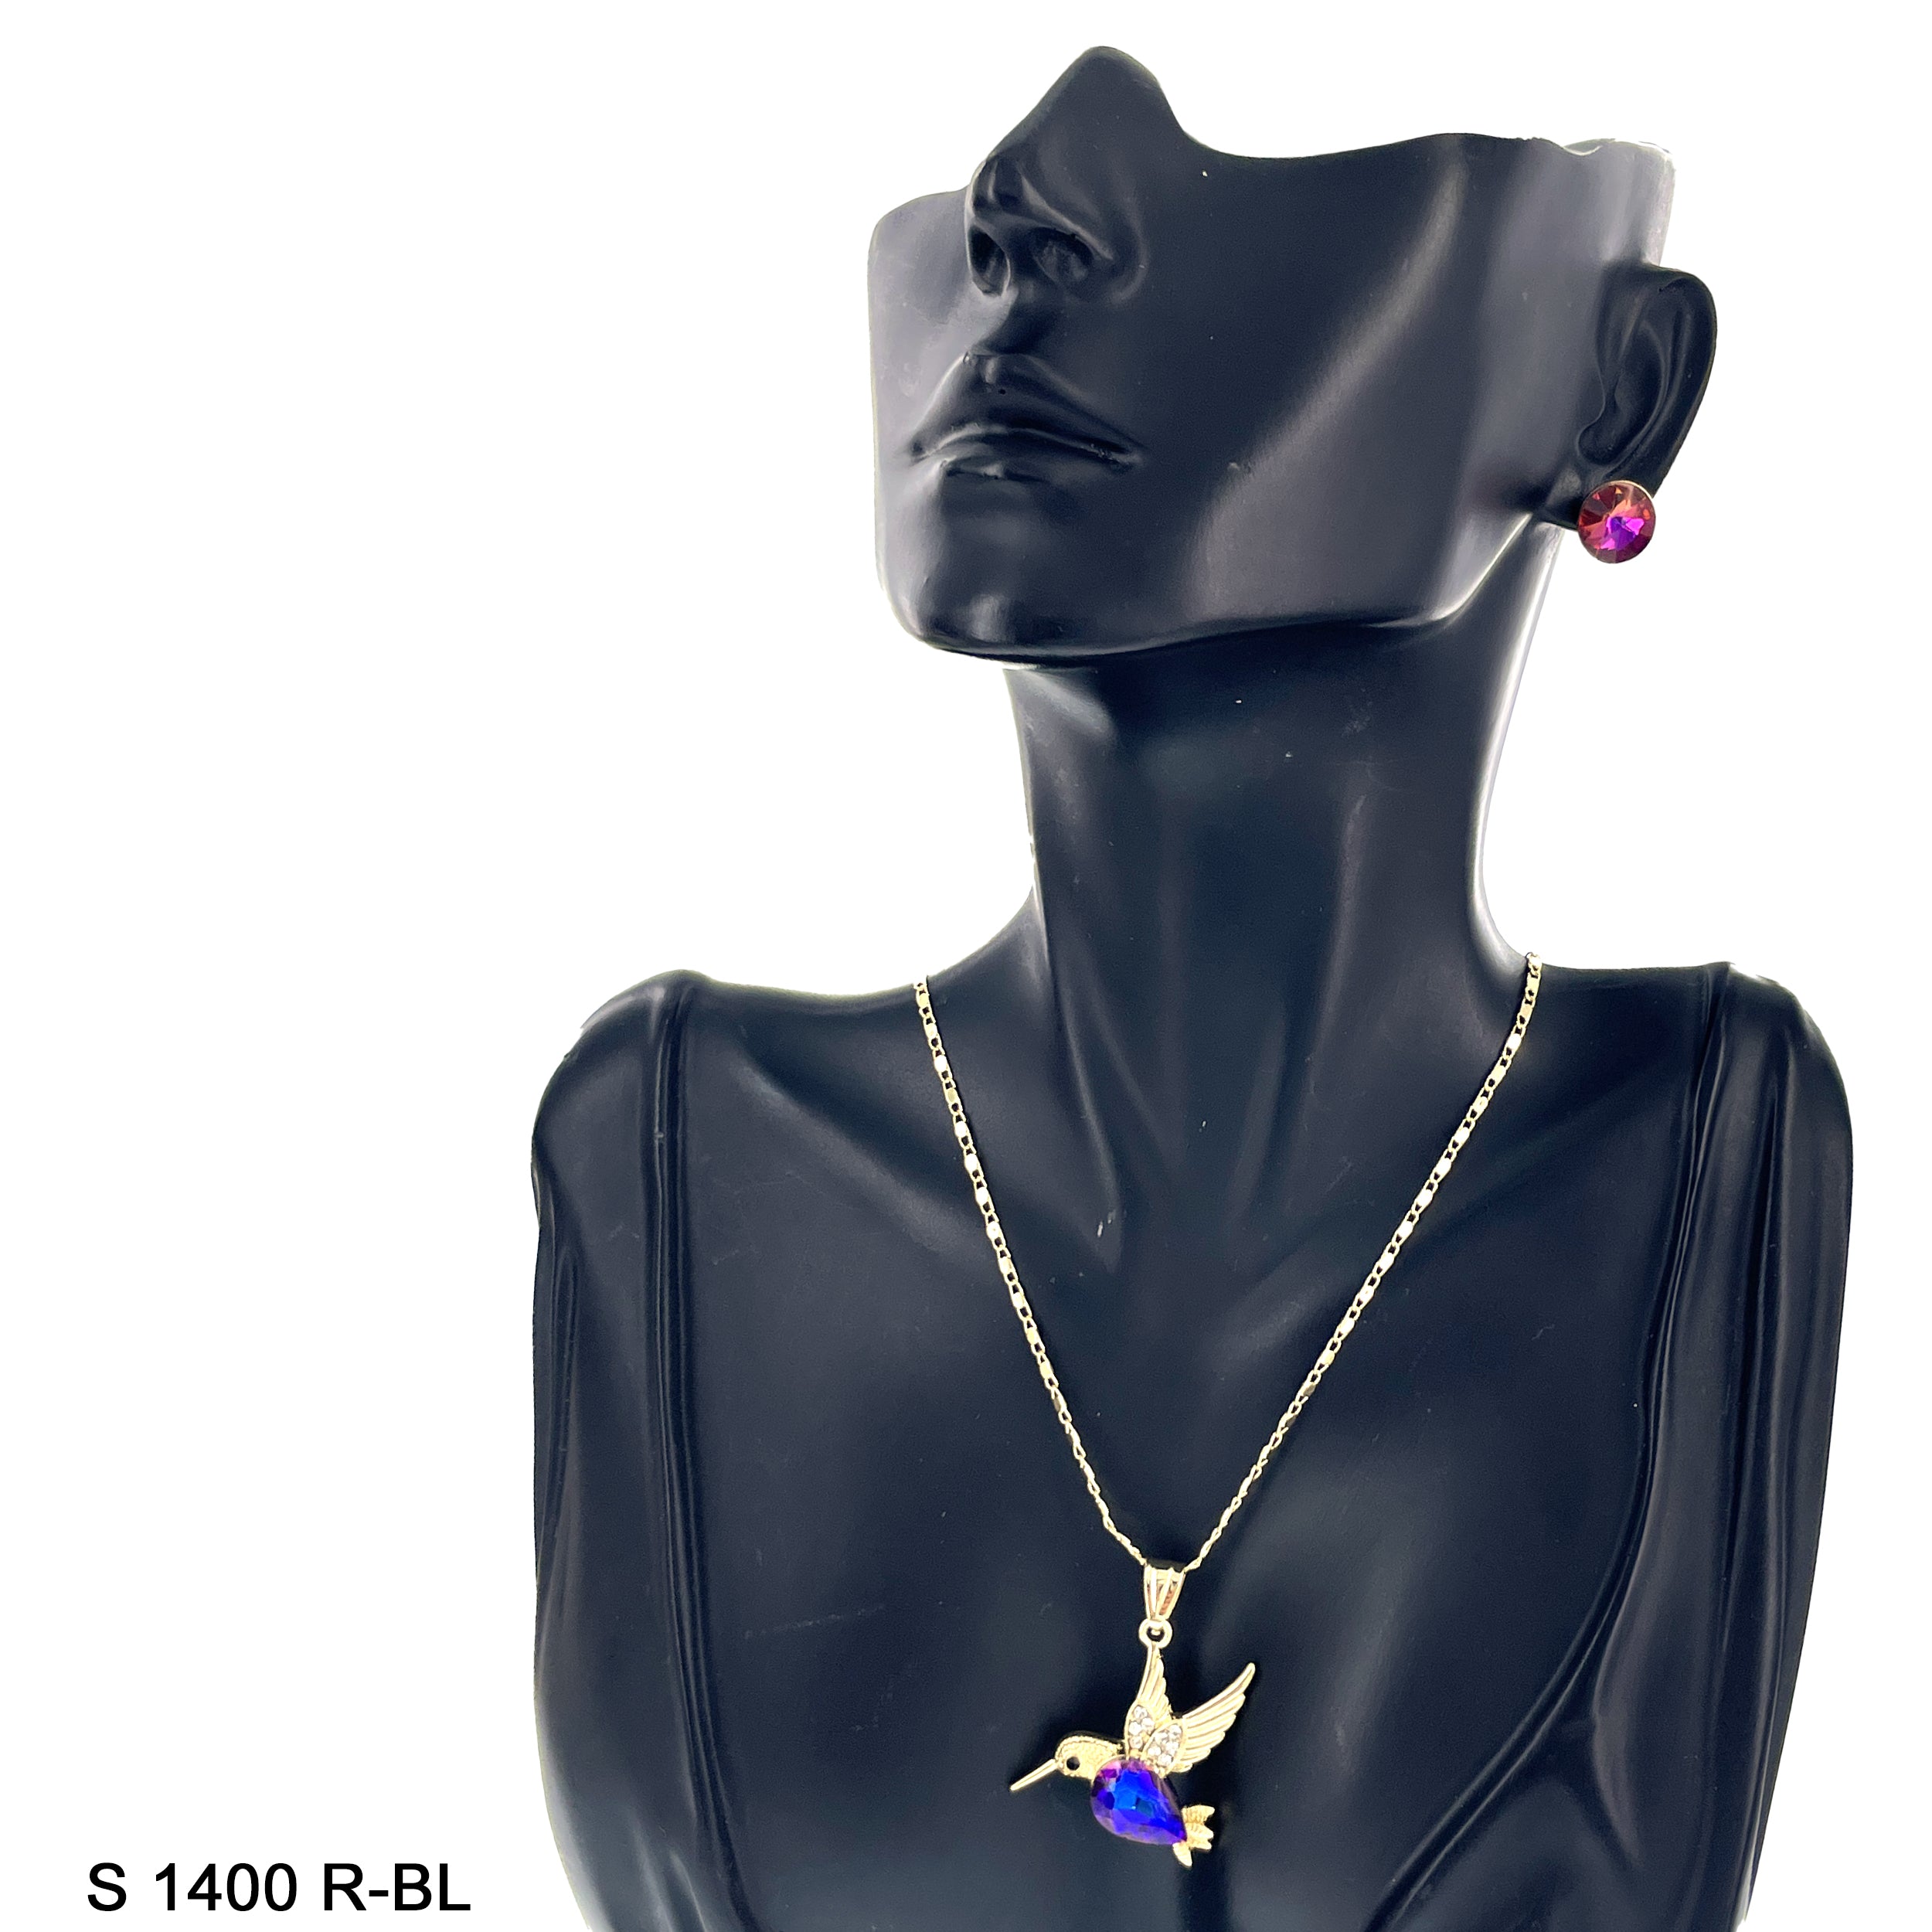 Hummingbird Pendant Necklace Set S 1400 R-BL